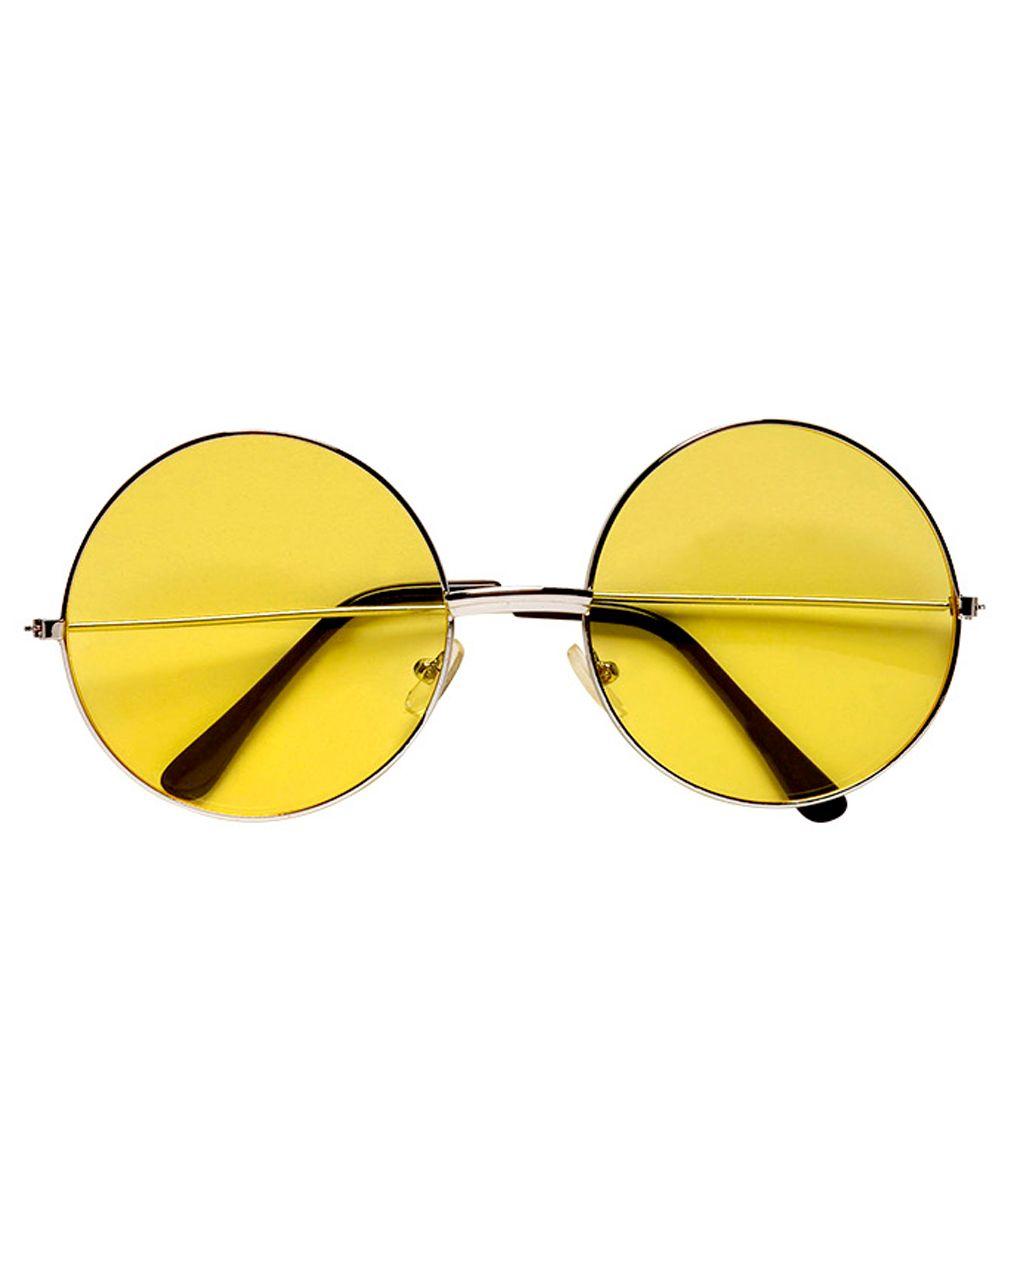 Hippie Glasses Logo - Yellow 70s Sunglasses Hippie Glasses Nickel Glasses Costume Glasses